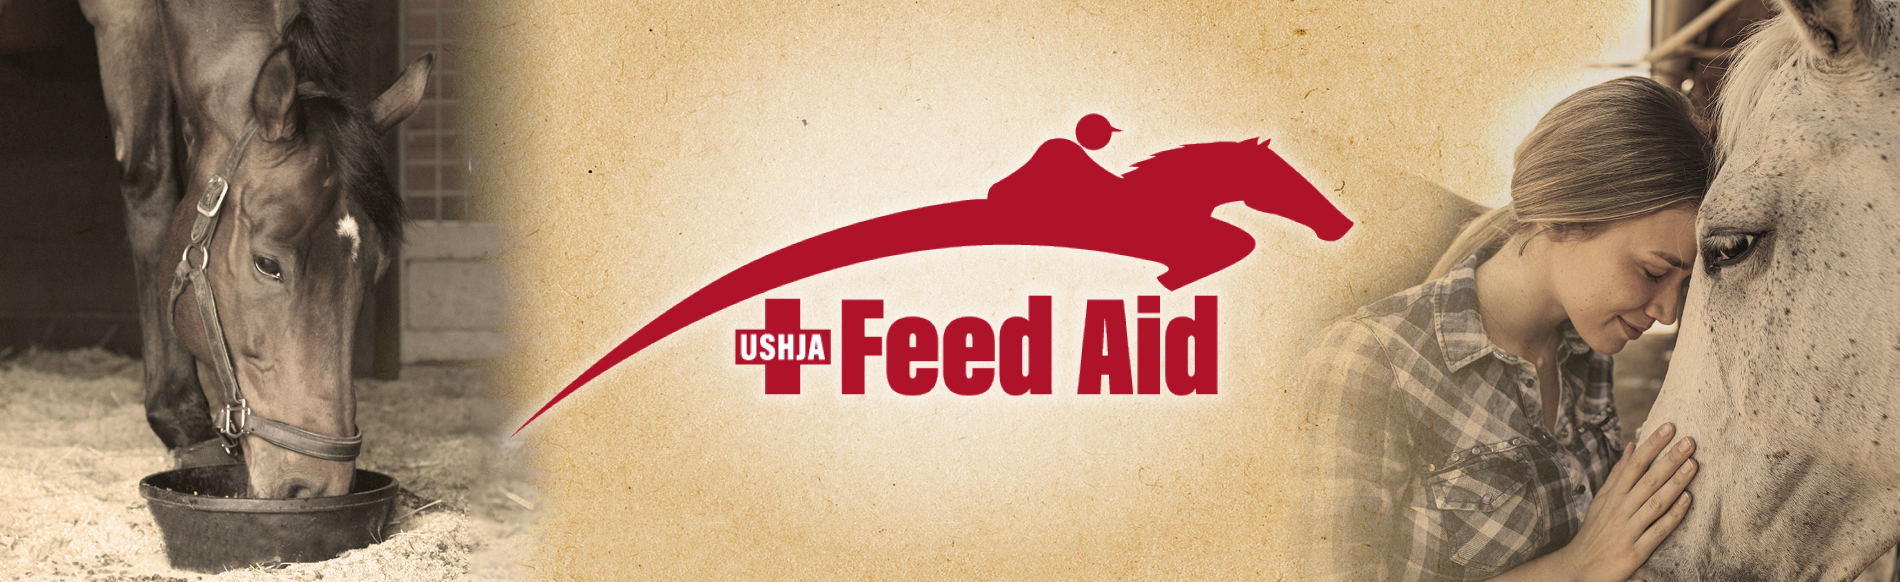 USHJA Launches Feed Aid Initiative